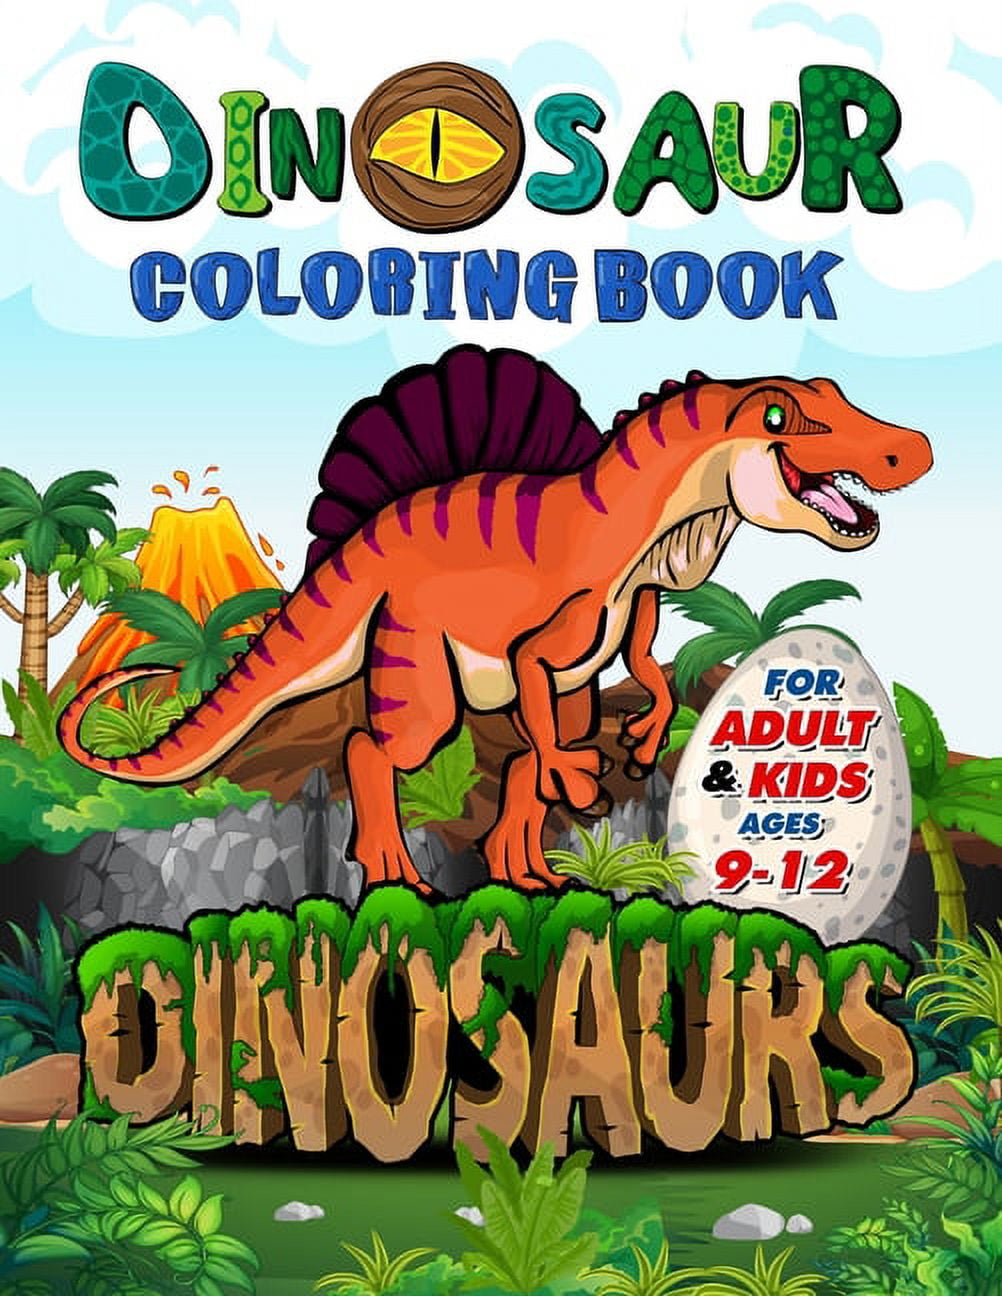 Dinosaur Coloring Book for Kids: Dinosaur Coloring Book for Boys, Girls,  Toddlers, Preschoolers, Kids 3-8, 6-8 (Dinosaur Books) Volume 4 (Paperback)